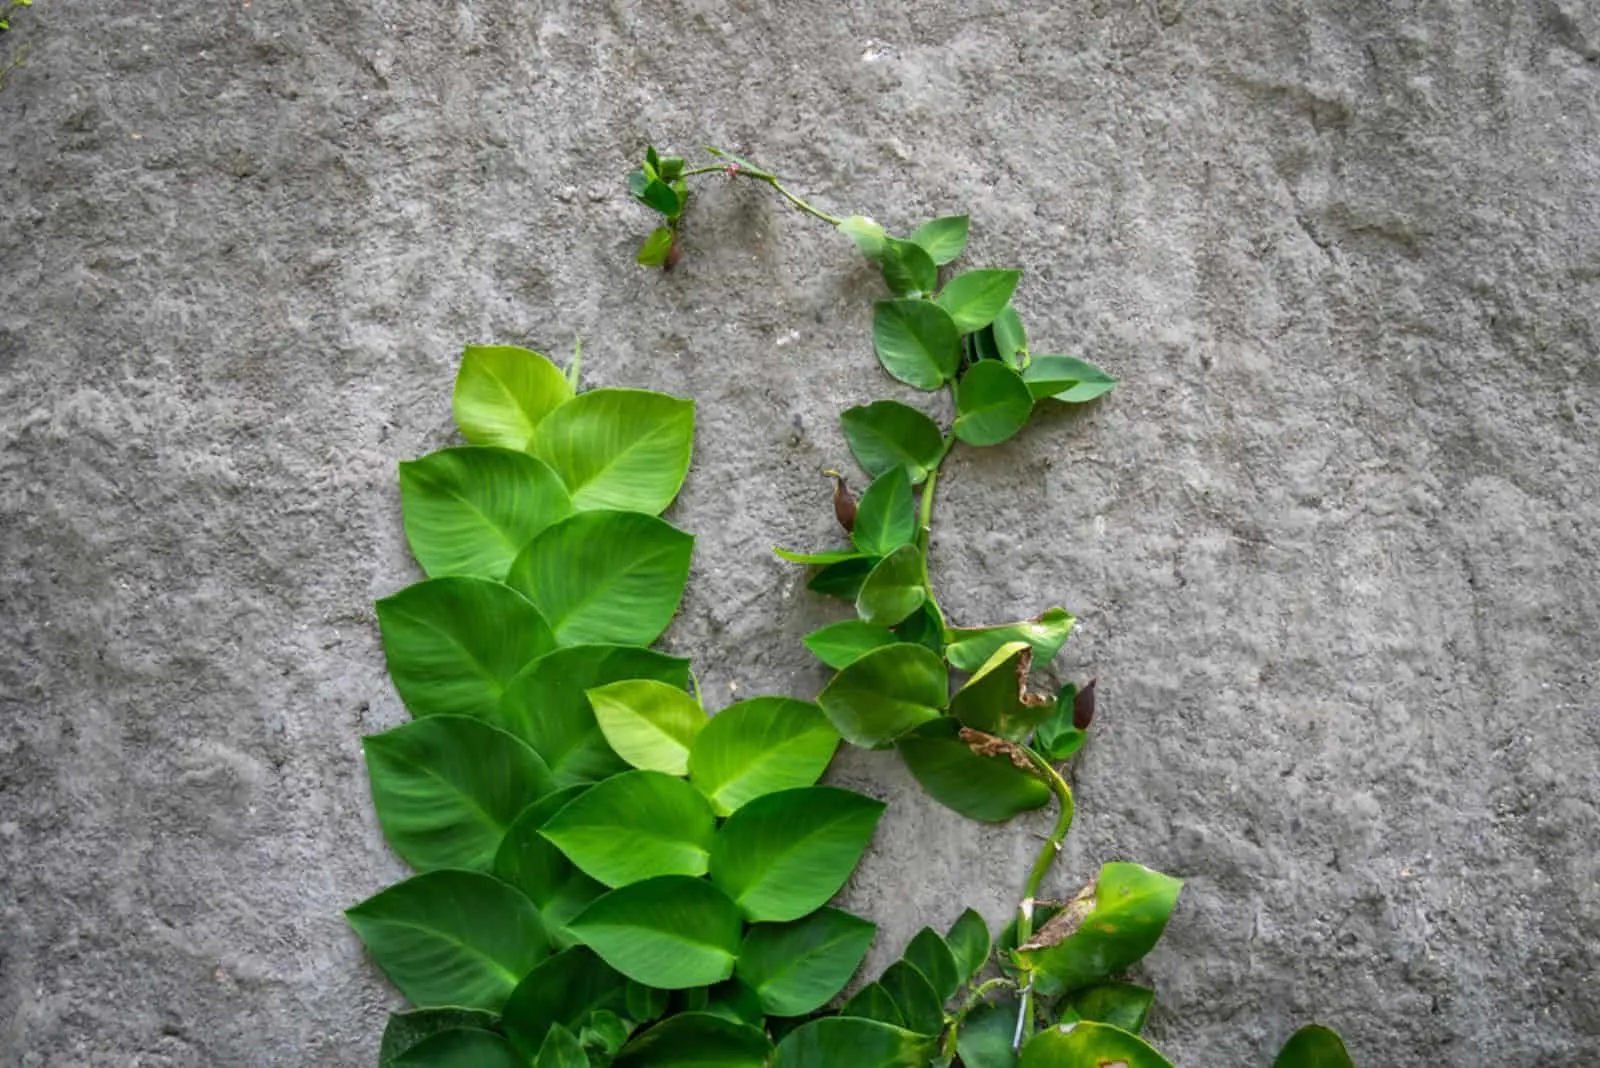 Rhaphidophora celatocaulis growing climbing on the cement wall